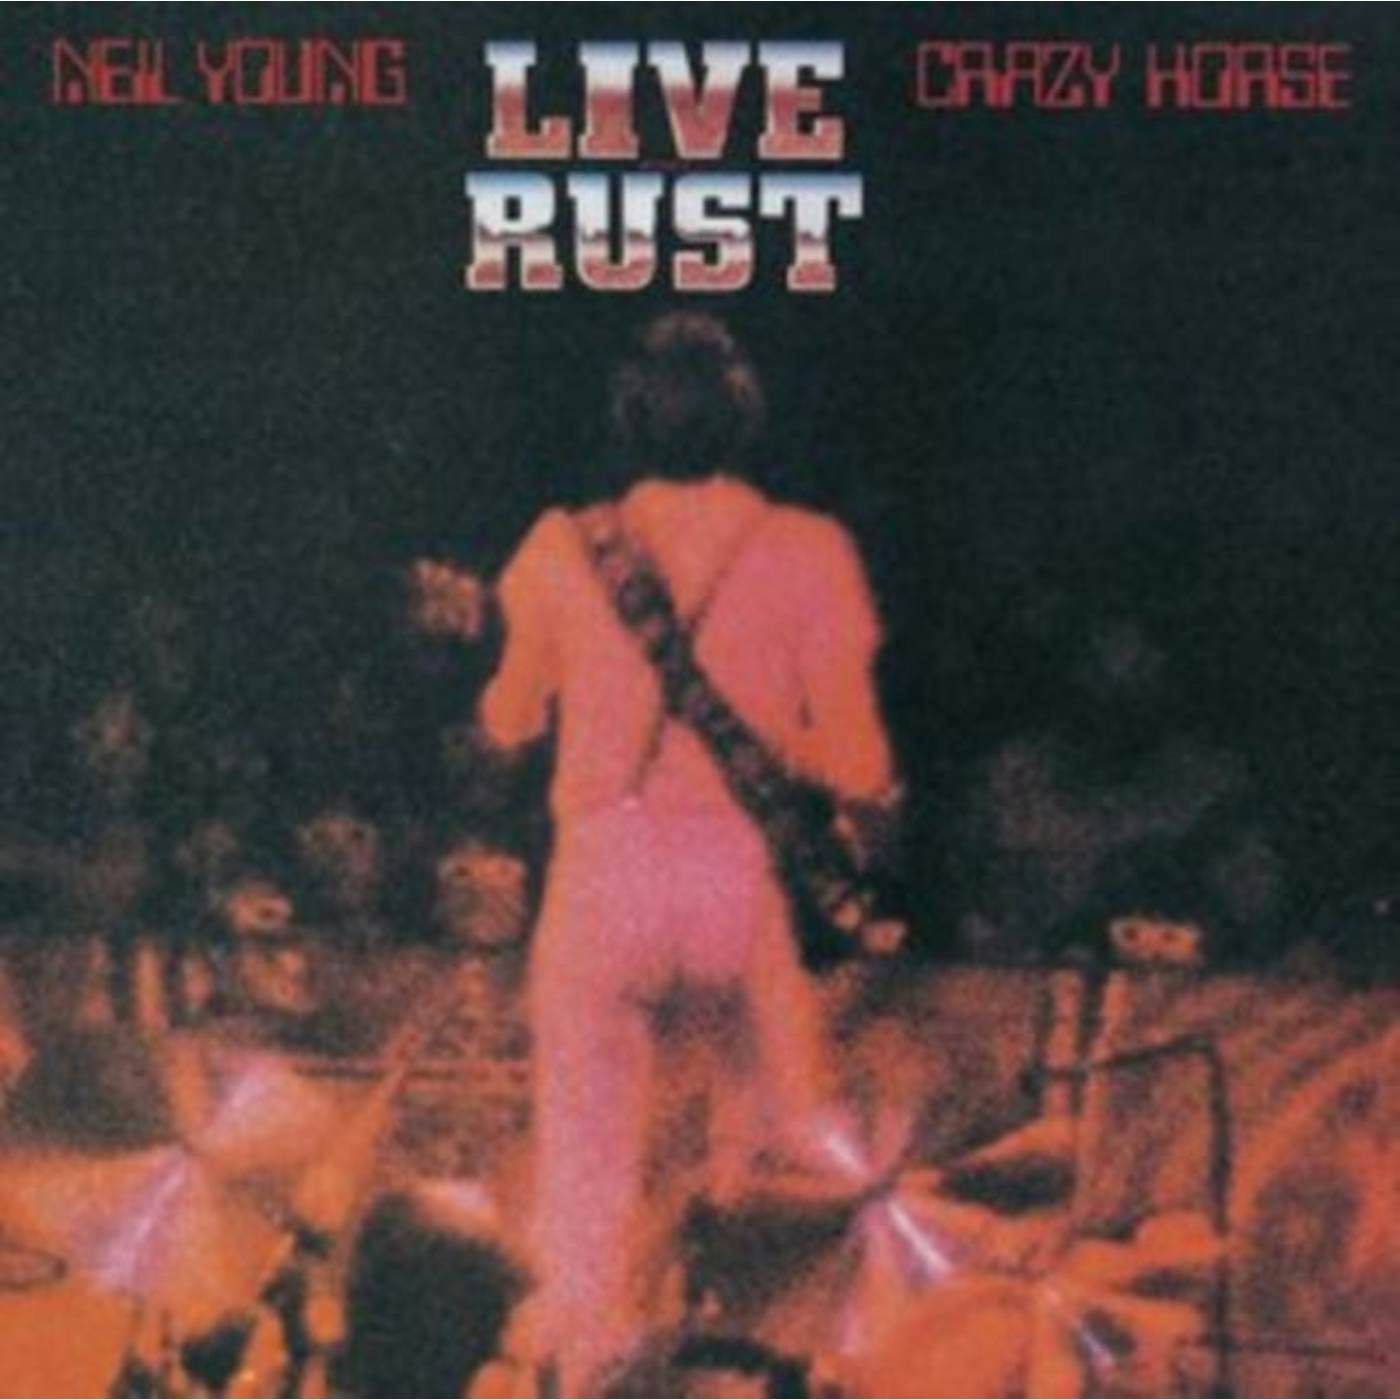 Neil Young LP Vinyl Record - Live Rust